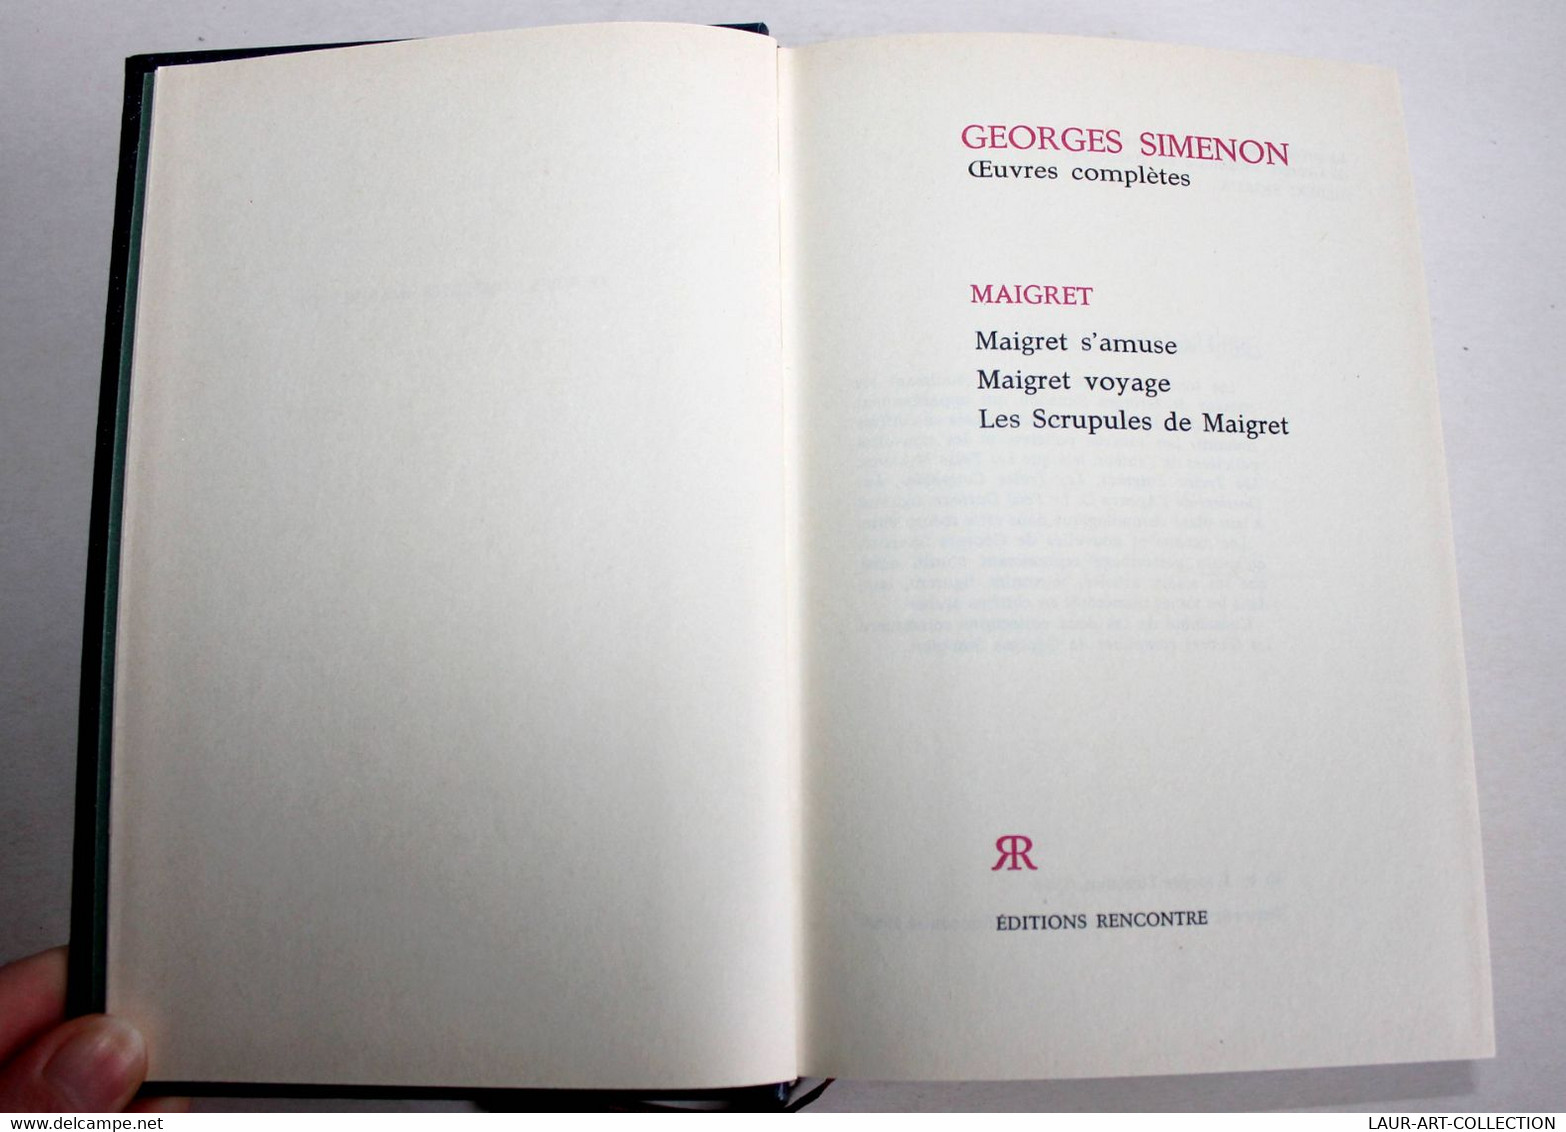 GEORGES SIMENON - OEUVRES COMPLETES, MAIGRET N°XX: M. S'AMUSE, VOYAGE, SCRUPULES / ANCIEN LIVRE DE COLLECTION (2301.259) - Simenon